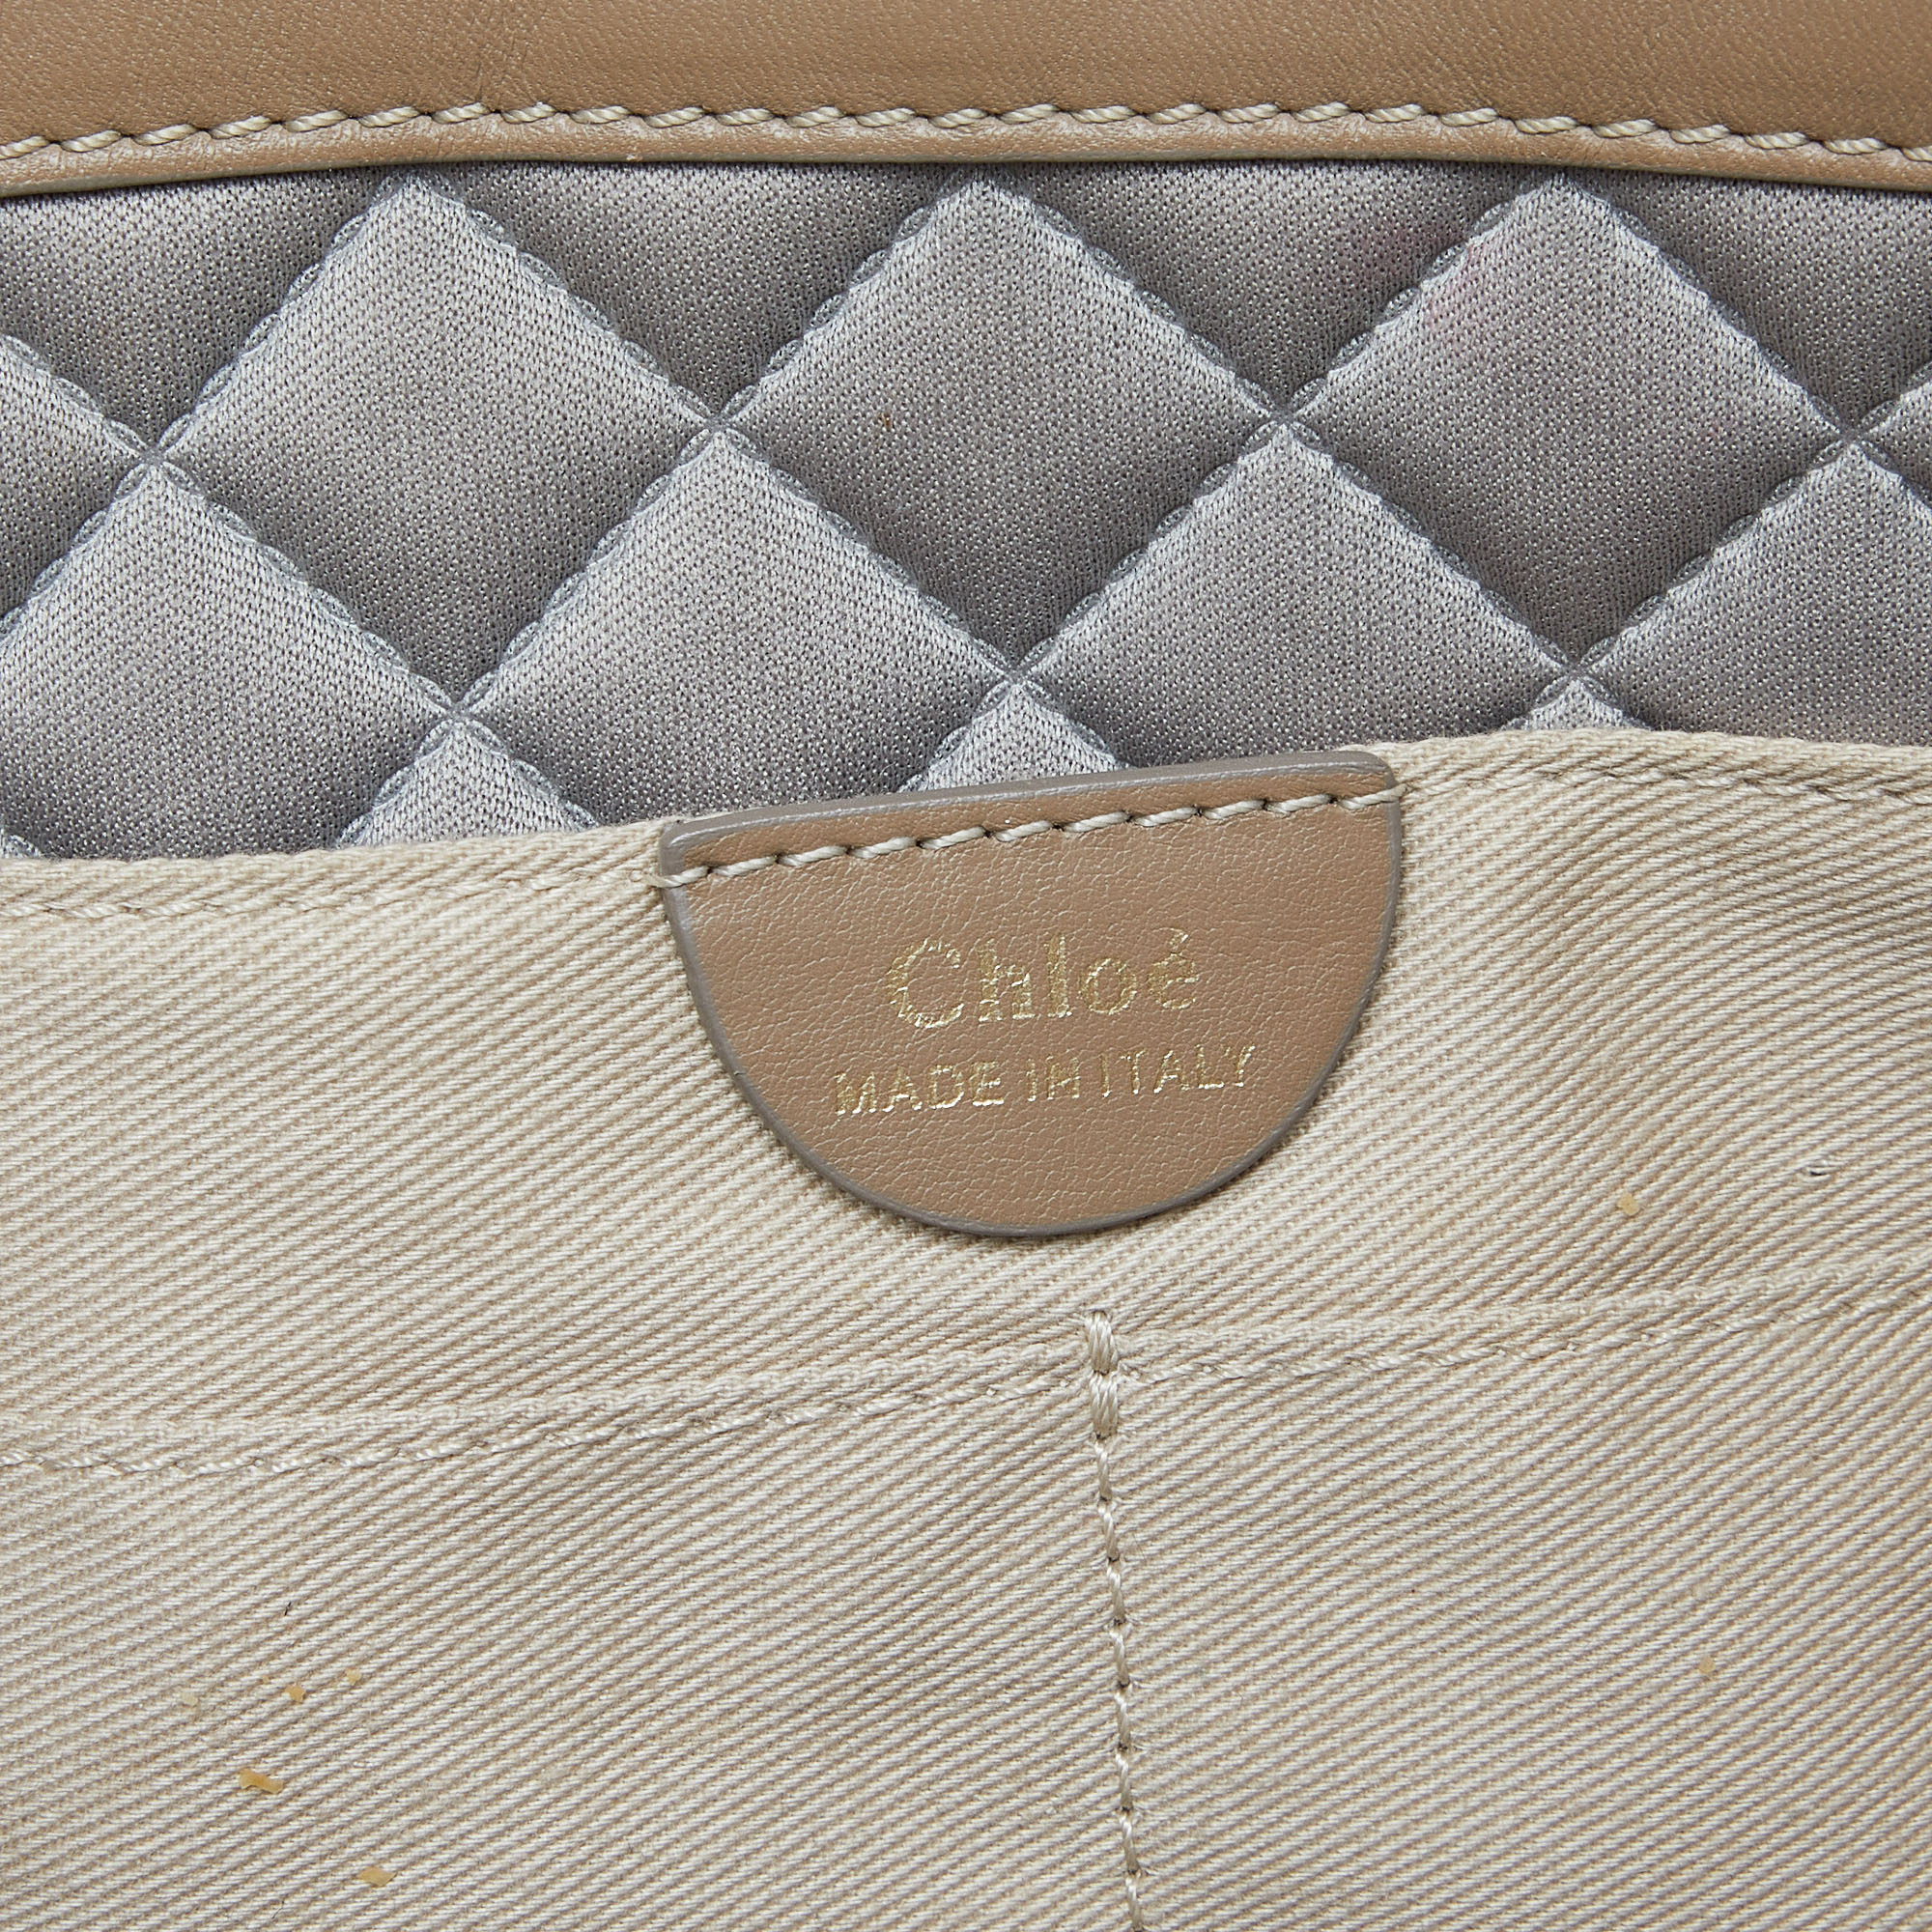 Chloe Tri Color Leather Chain Shoulder Bag